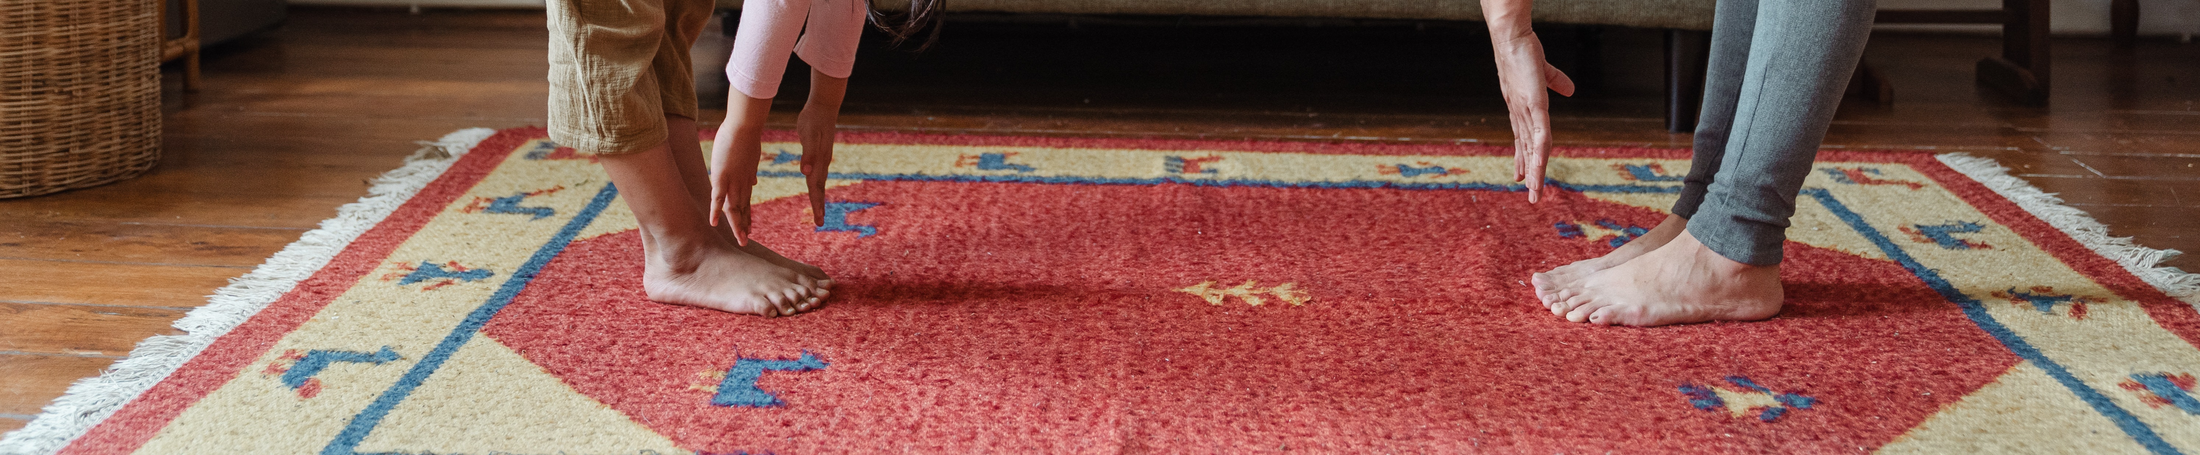 ITSOFT Non Slip Area Rug Pad Carpet Underlay Mat on Hard Floor Runner Extra  Strong Grip, 2 x 3 Feet